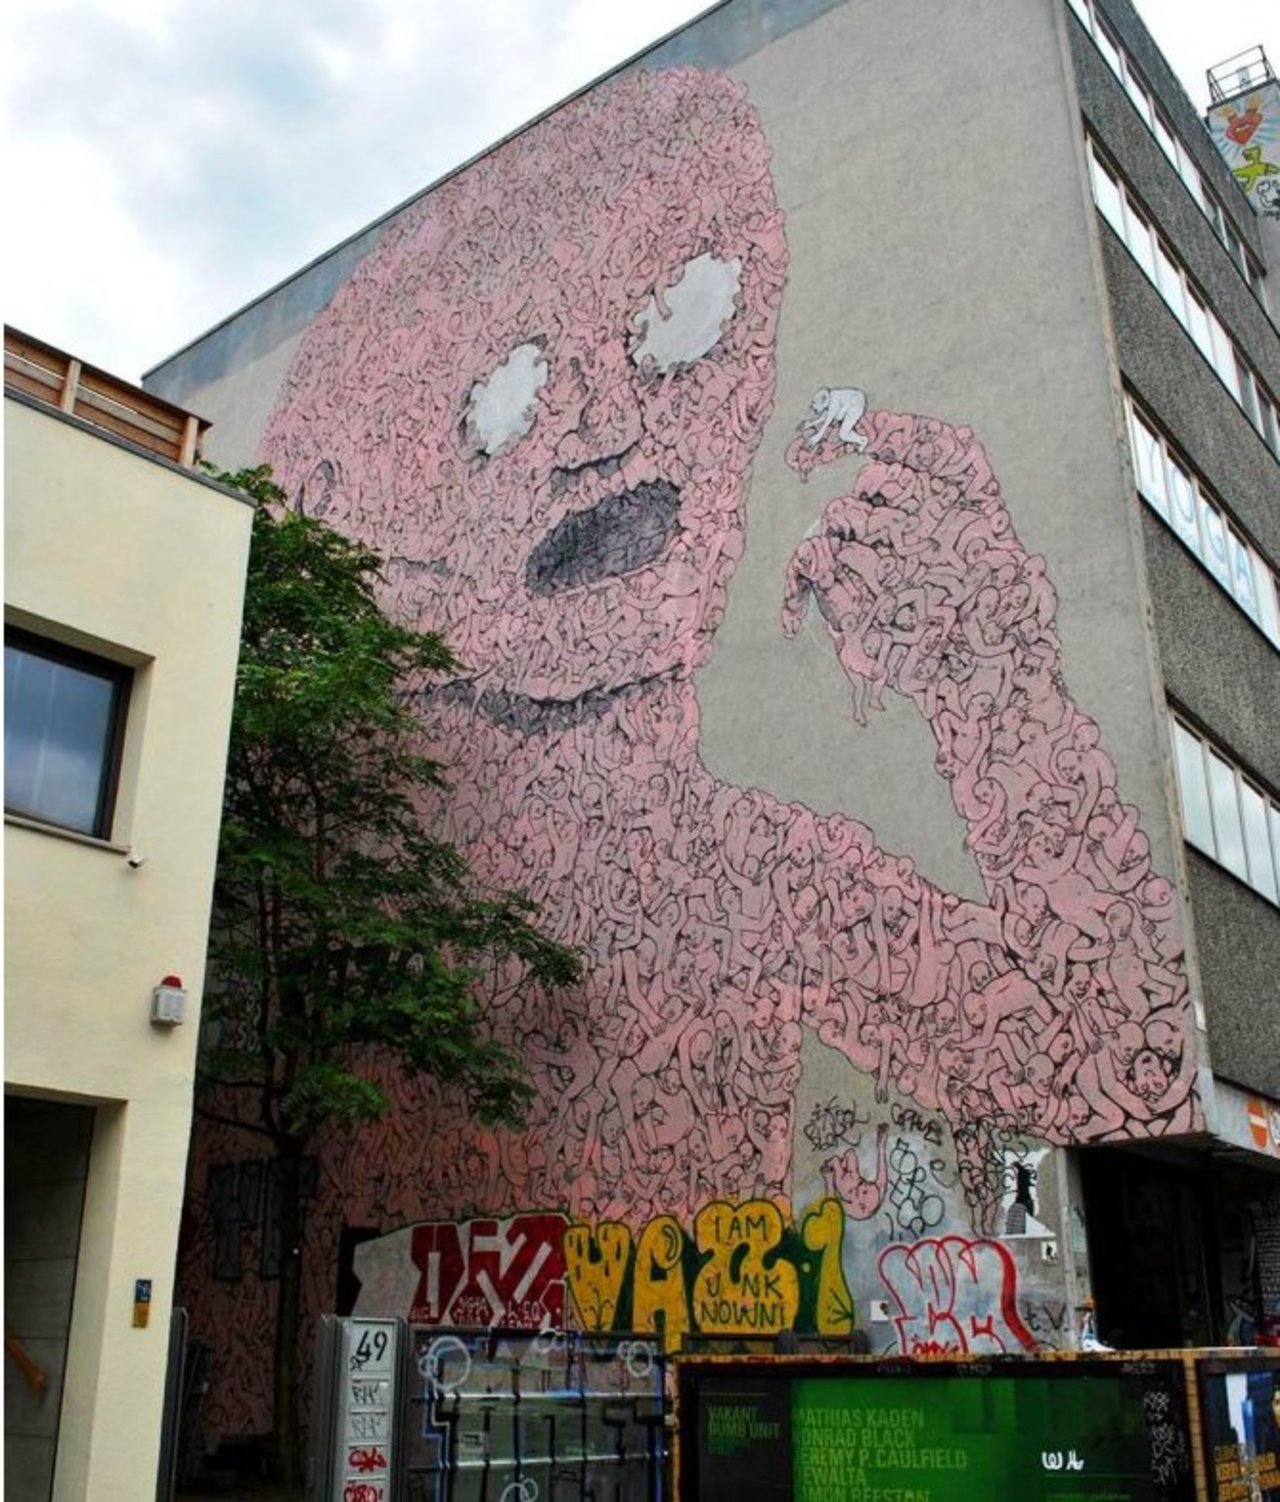 This mural by Italian street artist BLU is absolutely nuts. Berlin#mural #streetart #graffiti #art https://t.co/NUlfdGaKyK